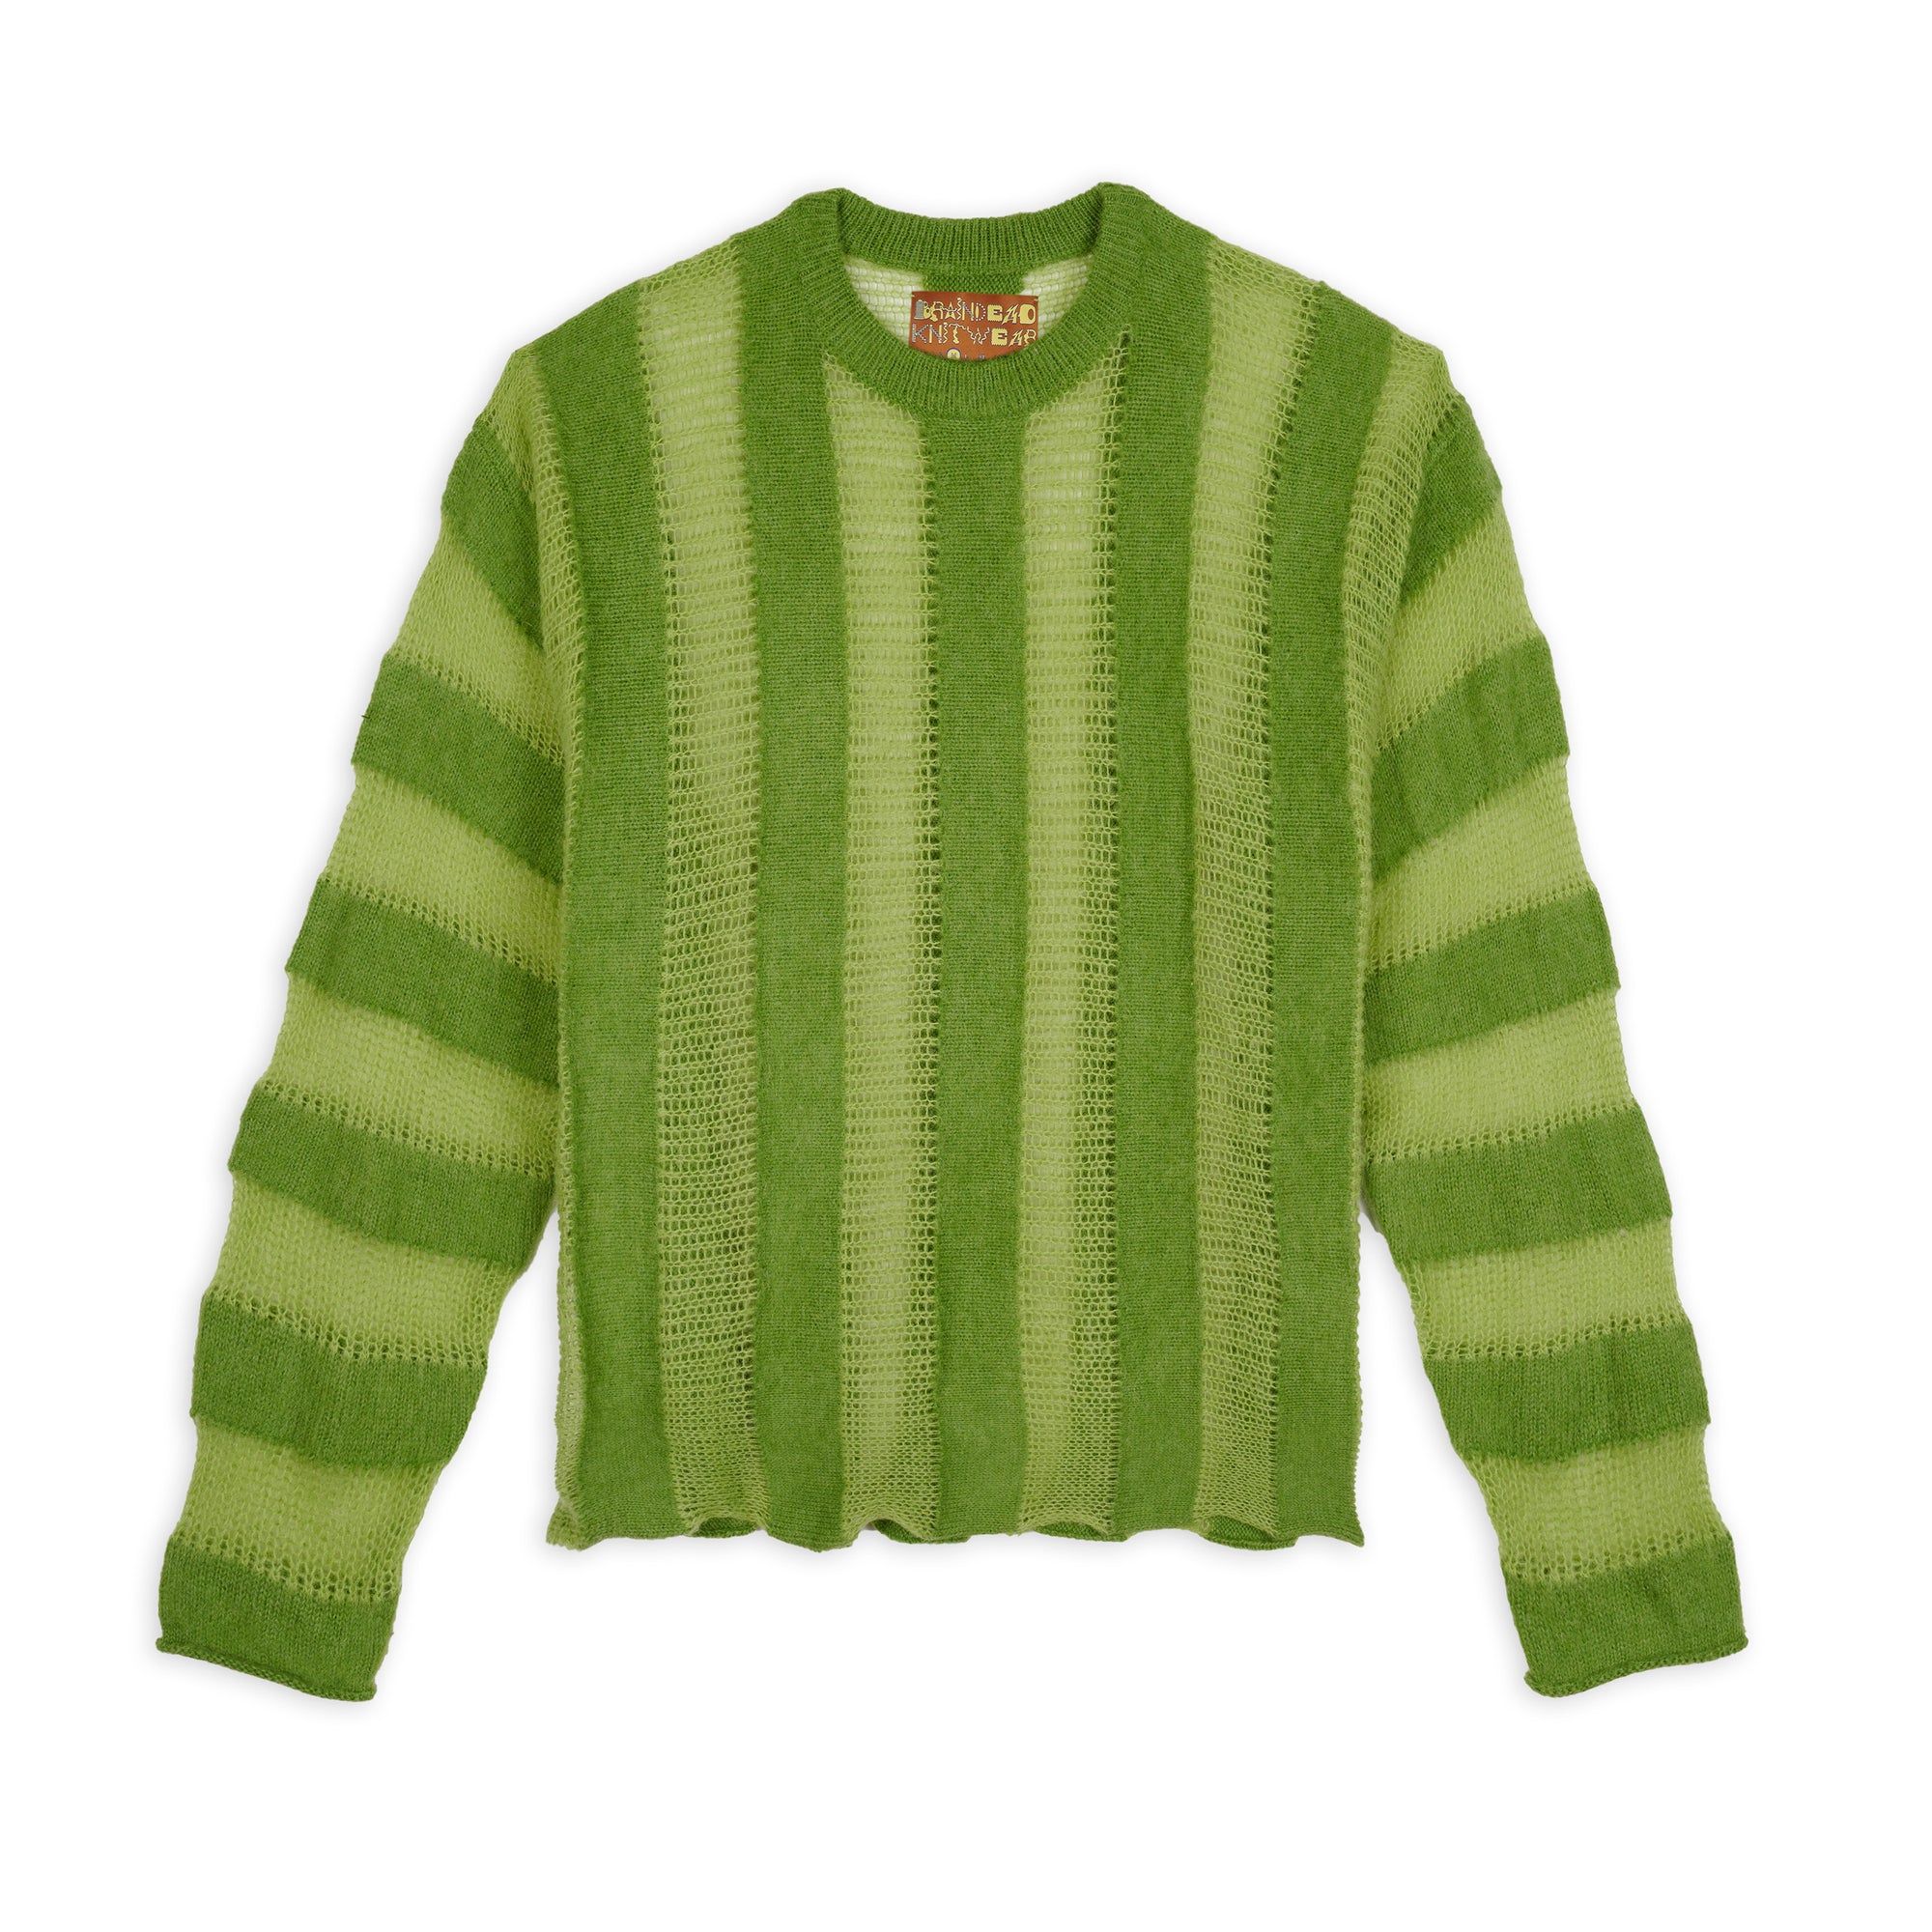 Brain Dead - Men's Fuzzy Threadbare Sweater - (Green) view 1